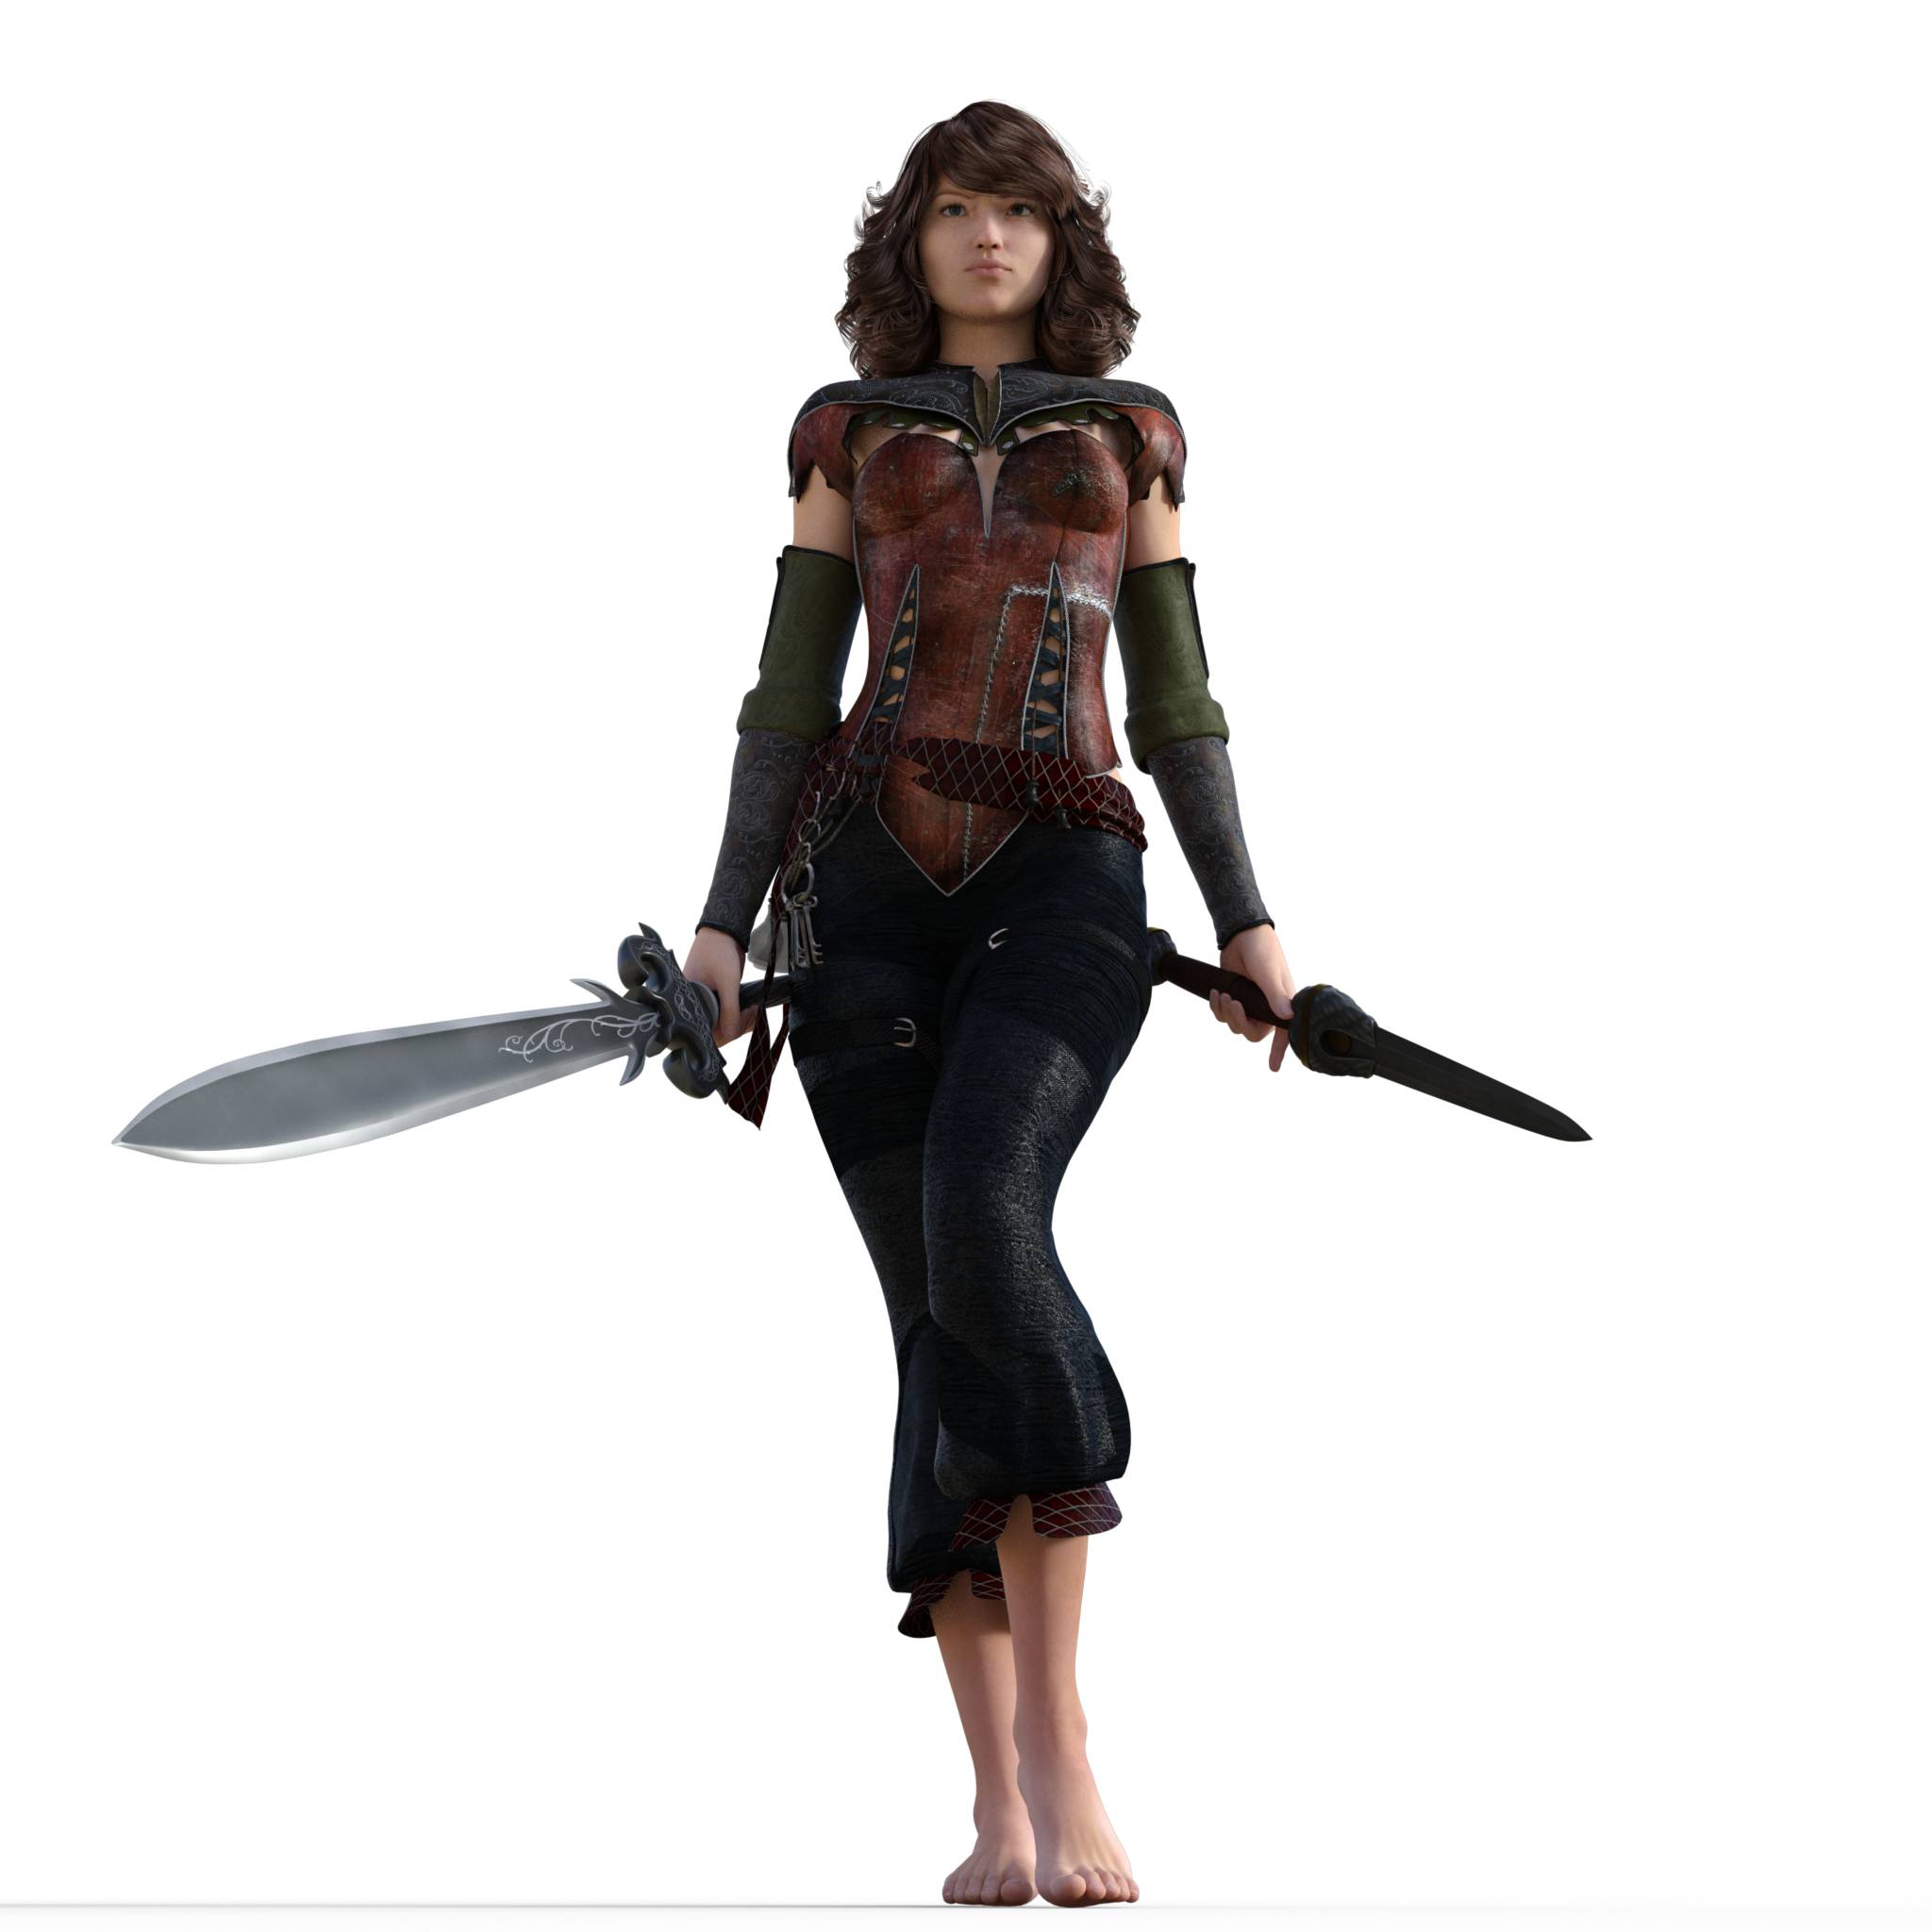 Woman Posing with Sword · Free Stock Photo